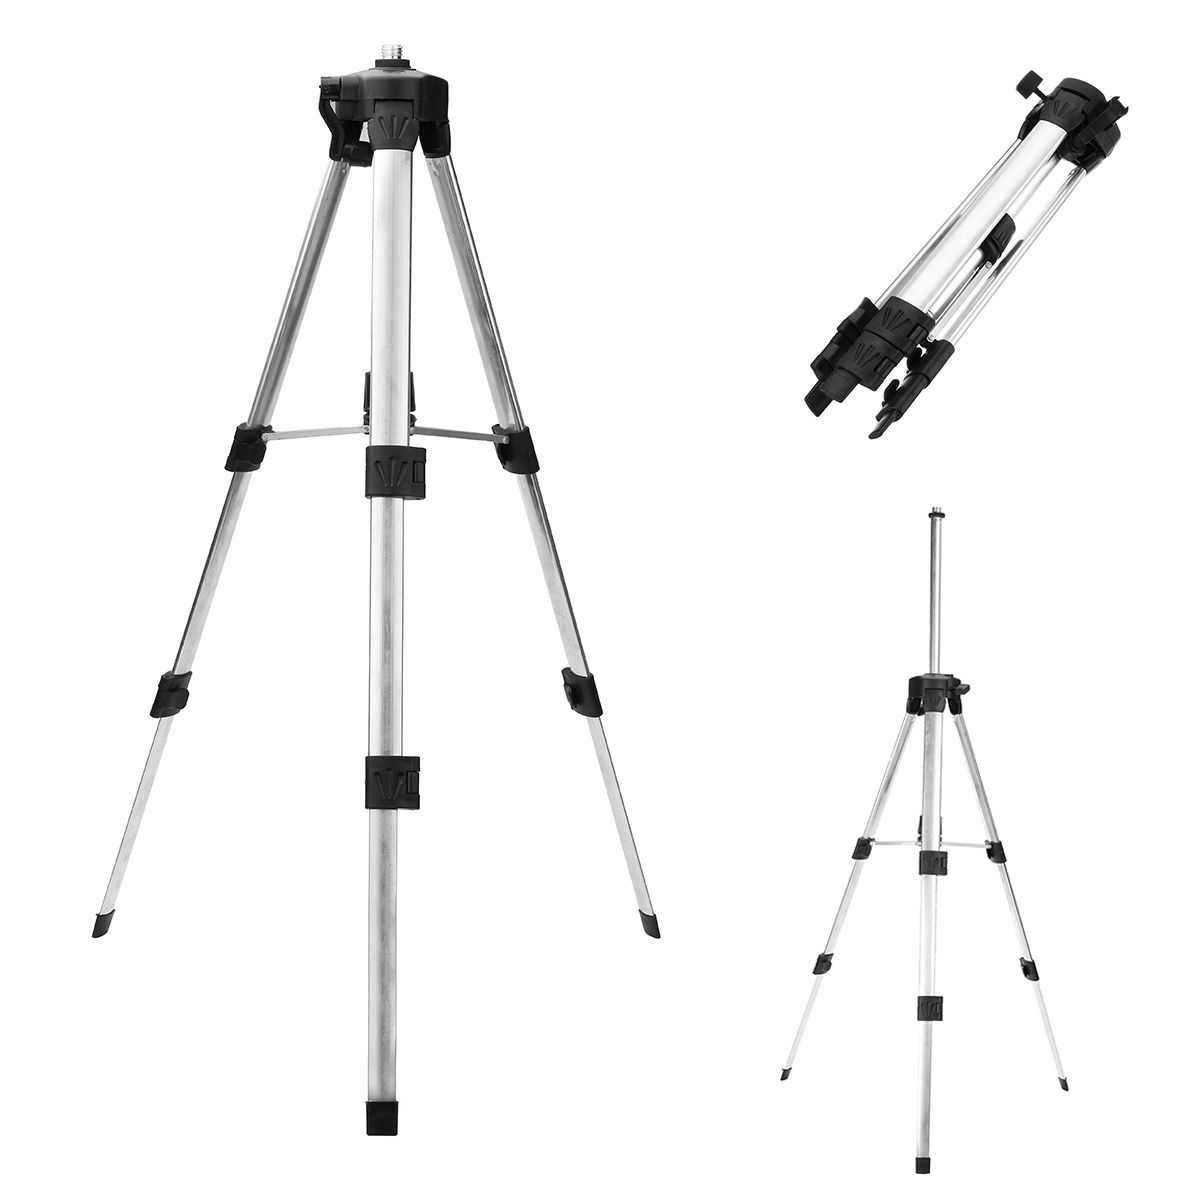 Level-Tripod-Holder-Stand-Mount-Telescopic-Aluminium-Alloy-for-Self-Leveling-Laser-1197242